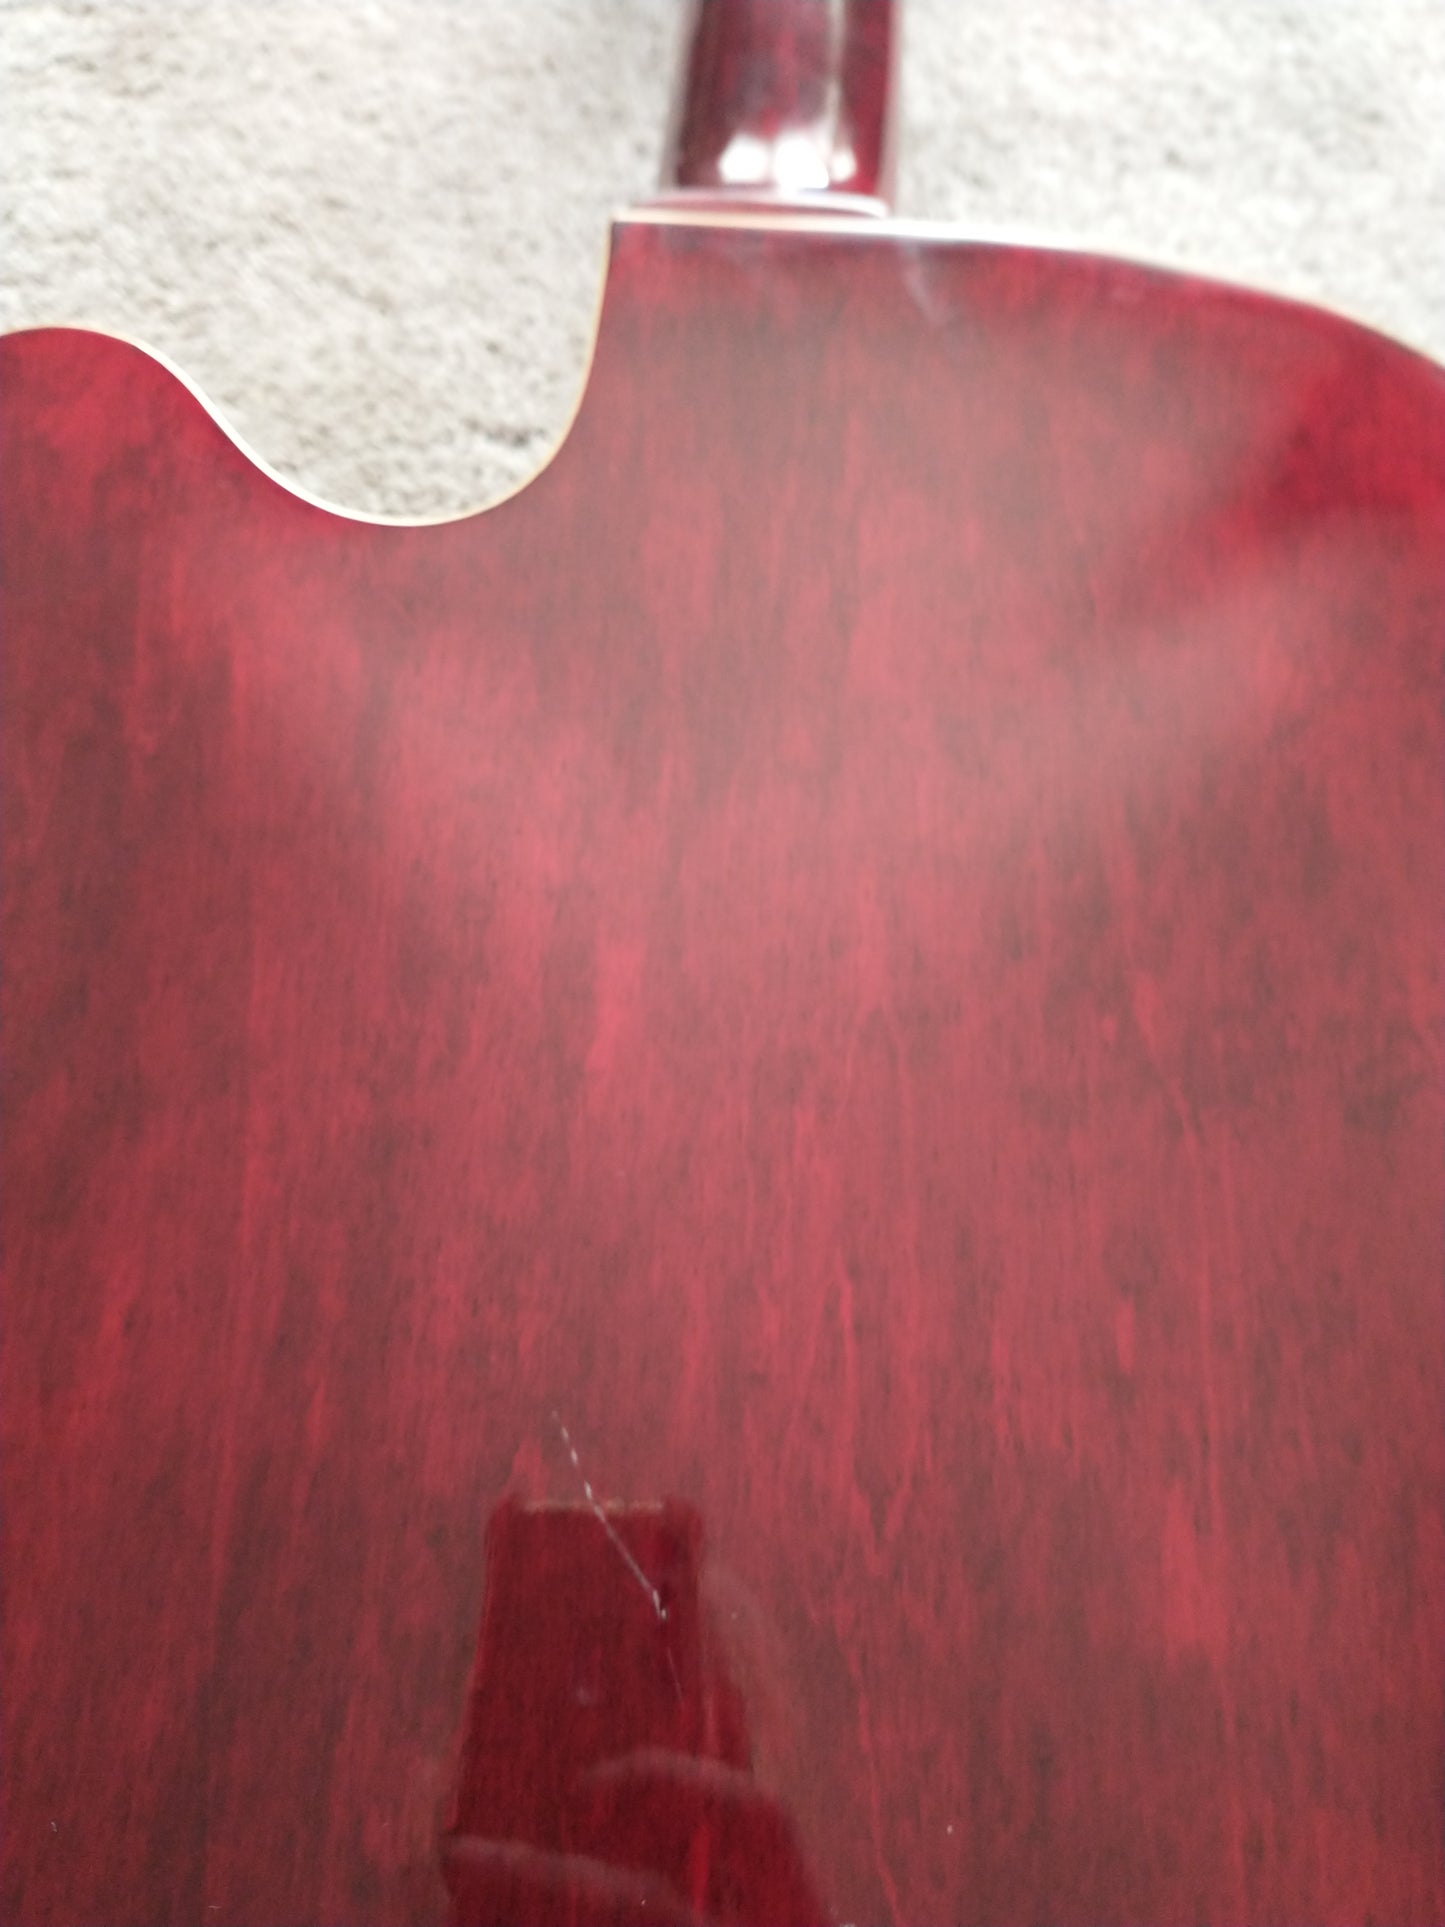 Carlo Robelli Thin Hollow Body Electric Guitar - 2000s - Wine Red - Peerless